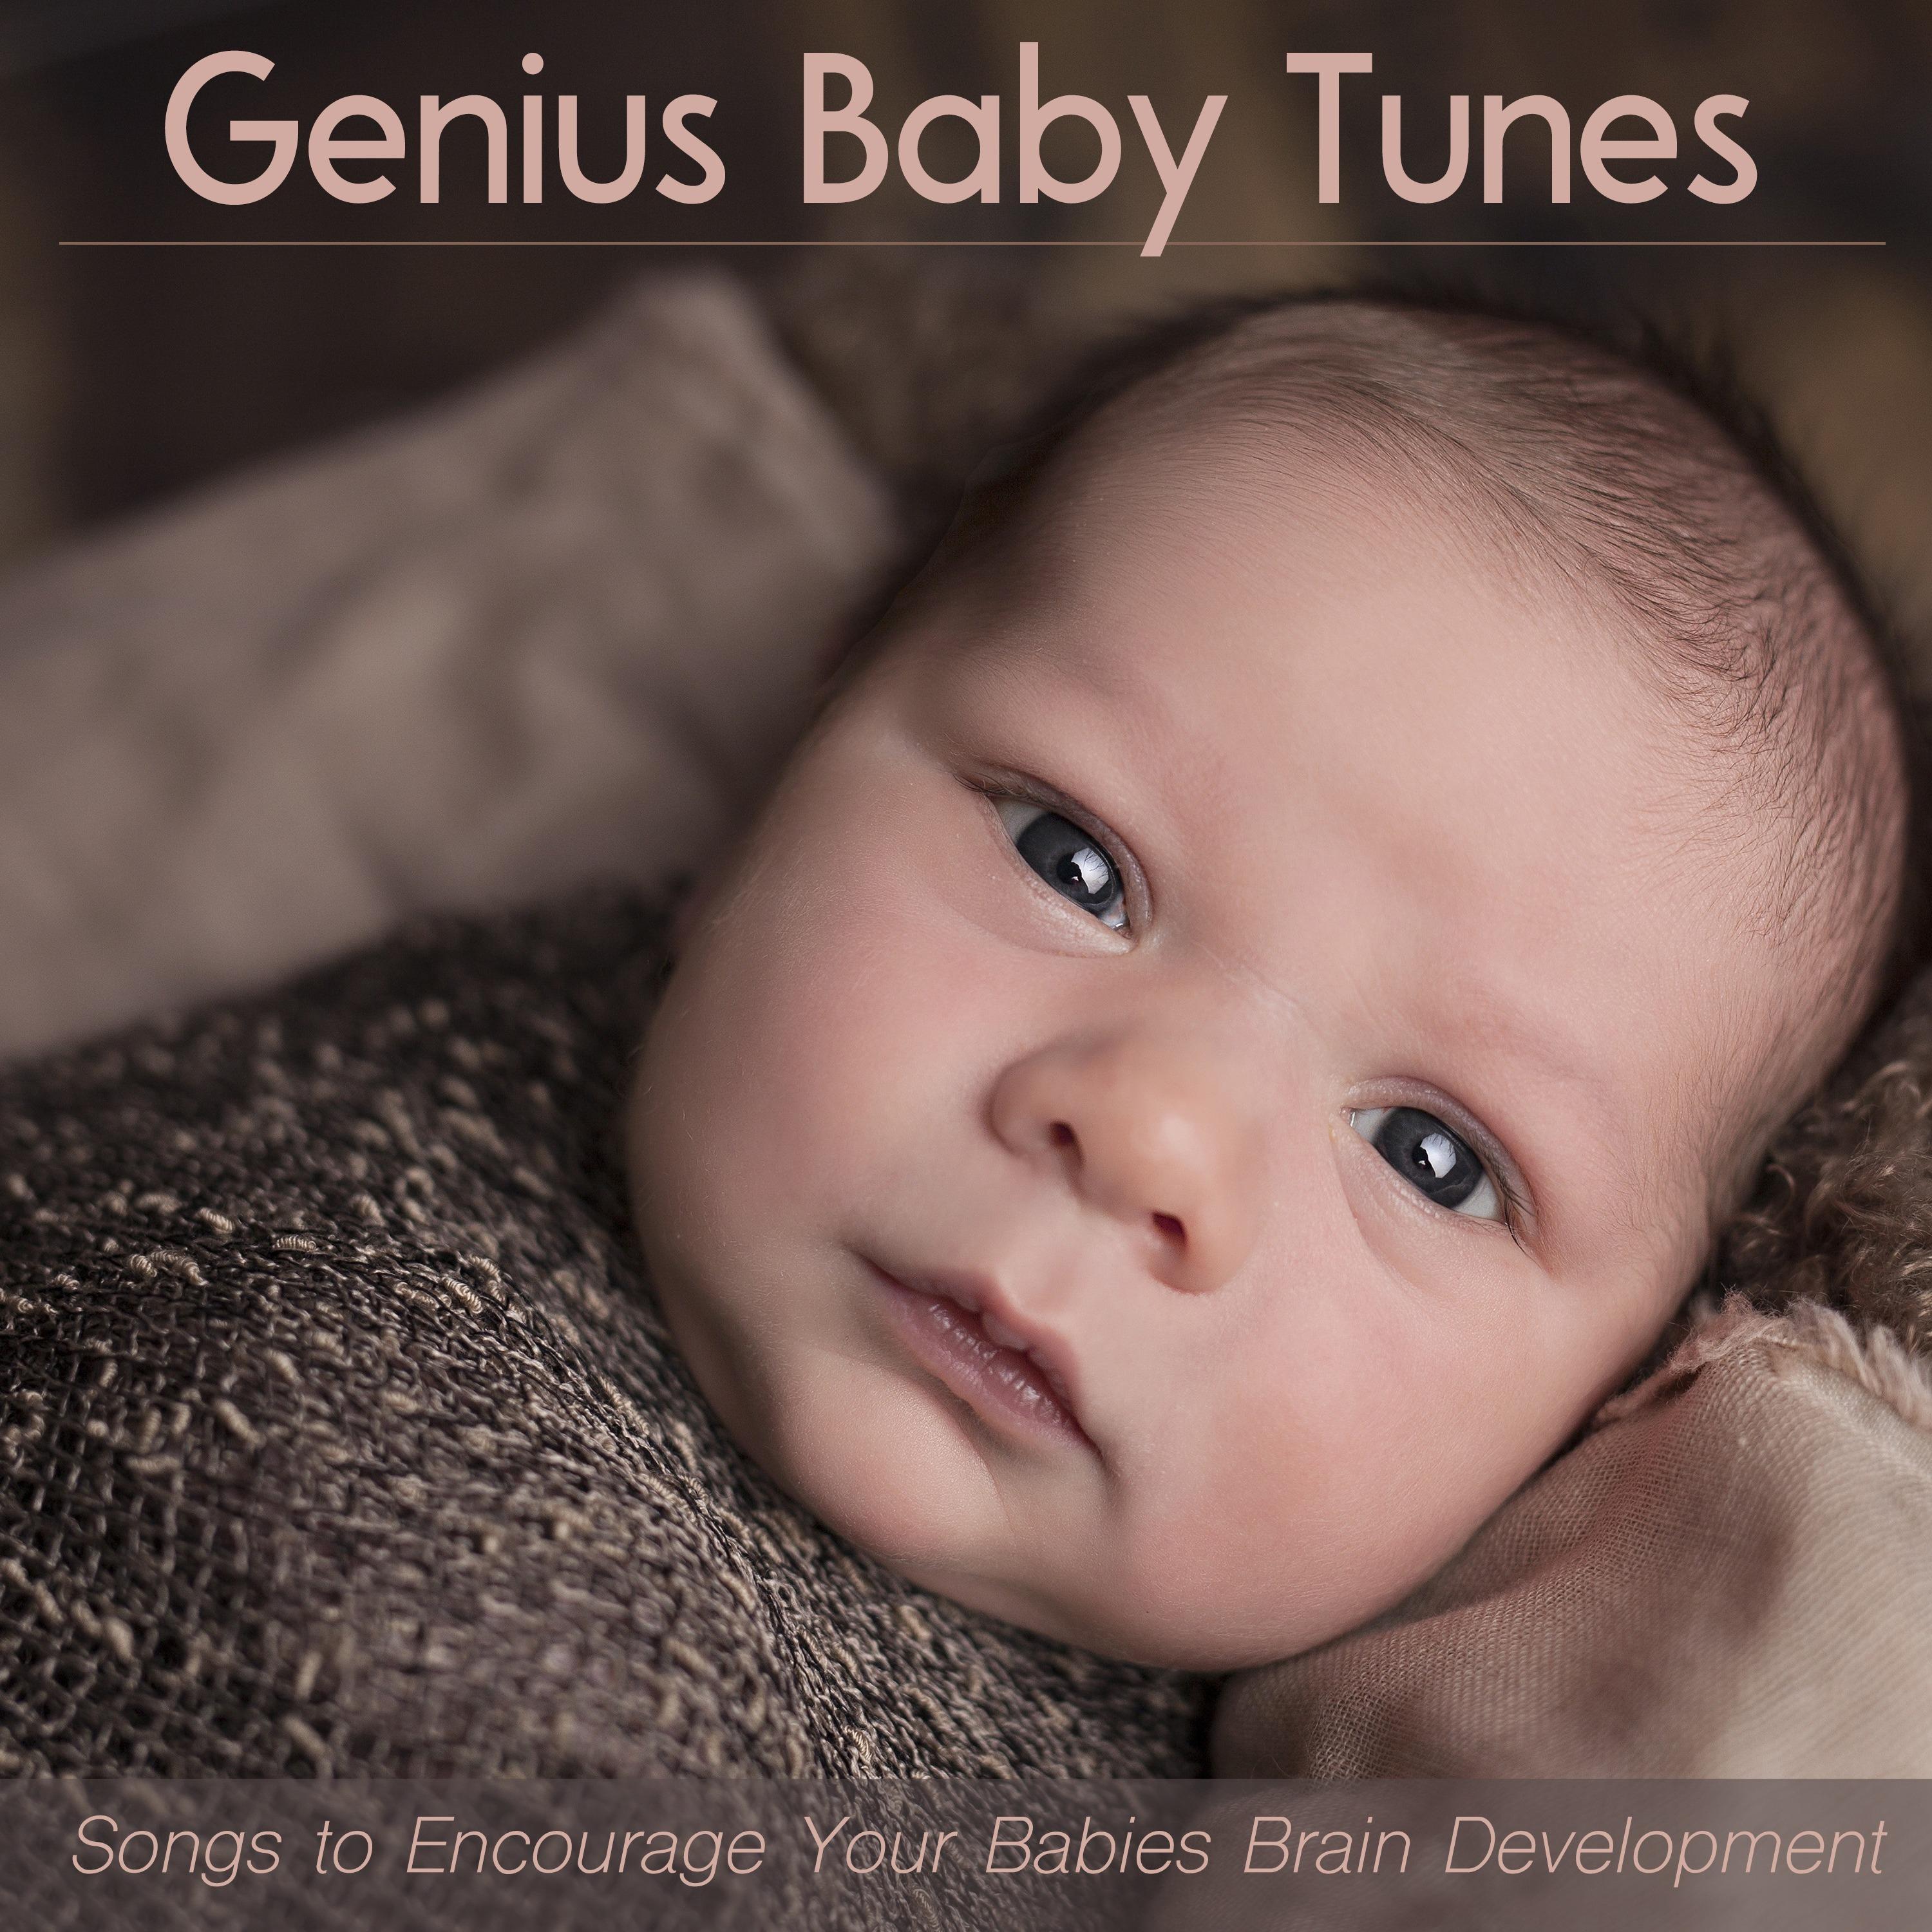 Genius Baby Tunes: Songs to Encourage Your Babies Brain Development